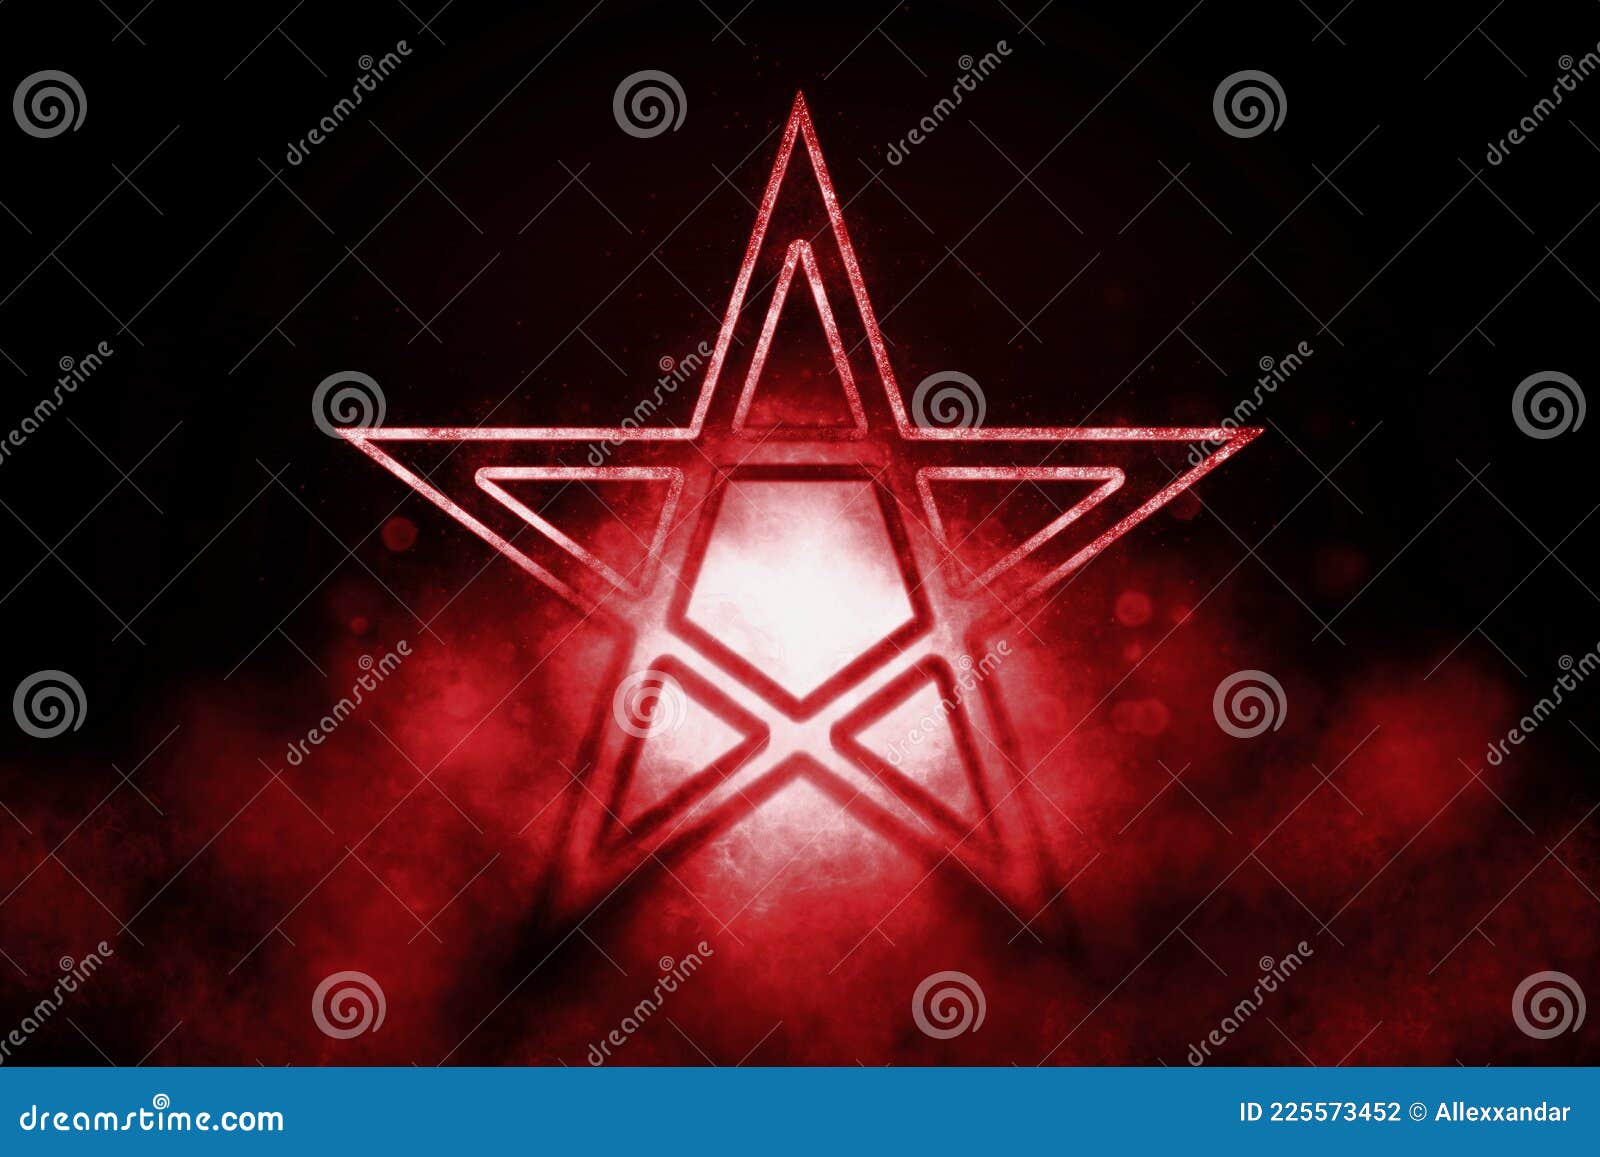 pentagram , five pointed star, satanism